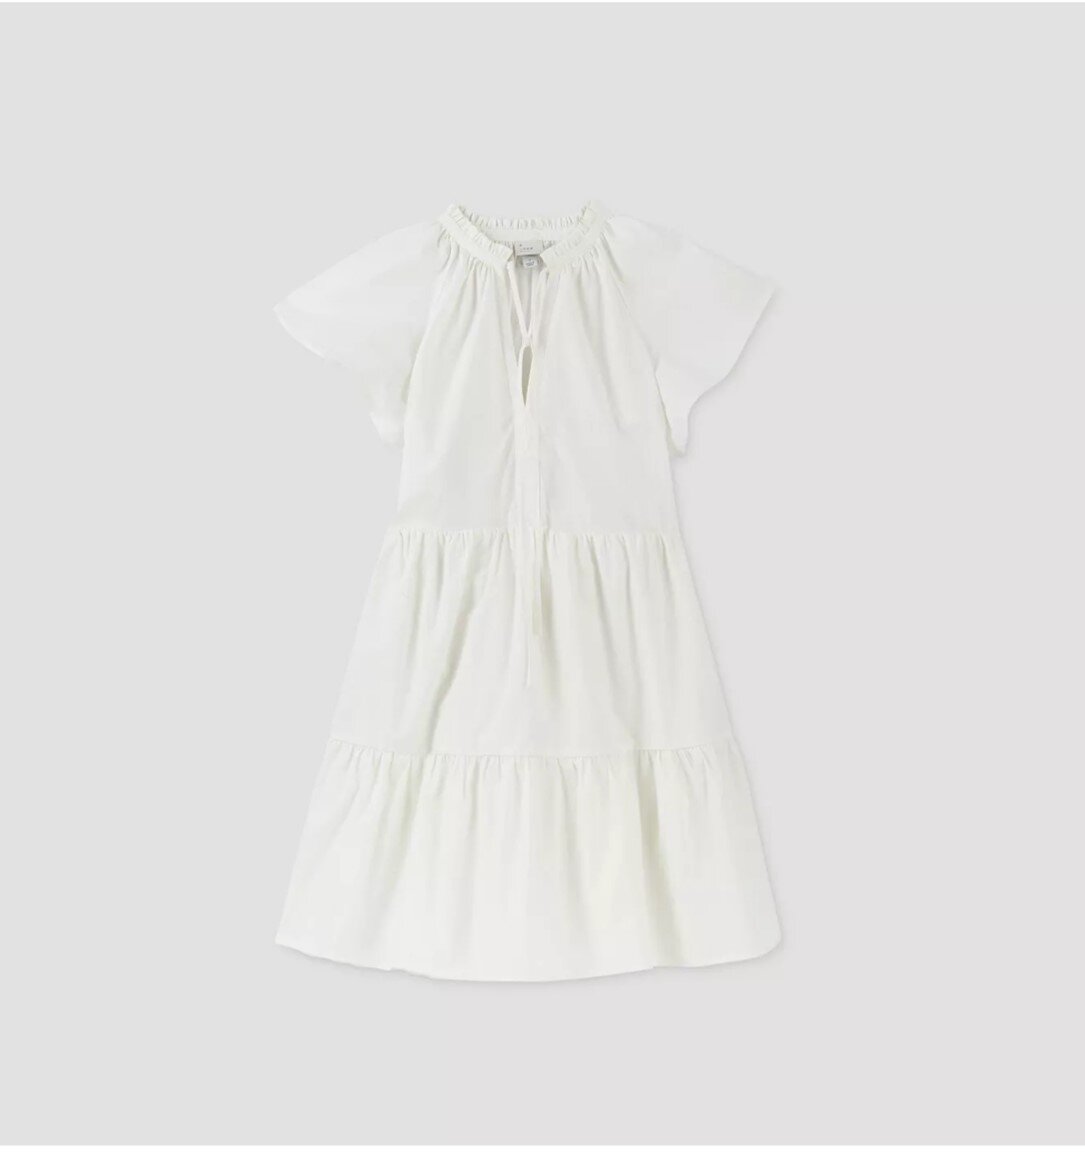 White Poplin Dress  |  $25